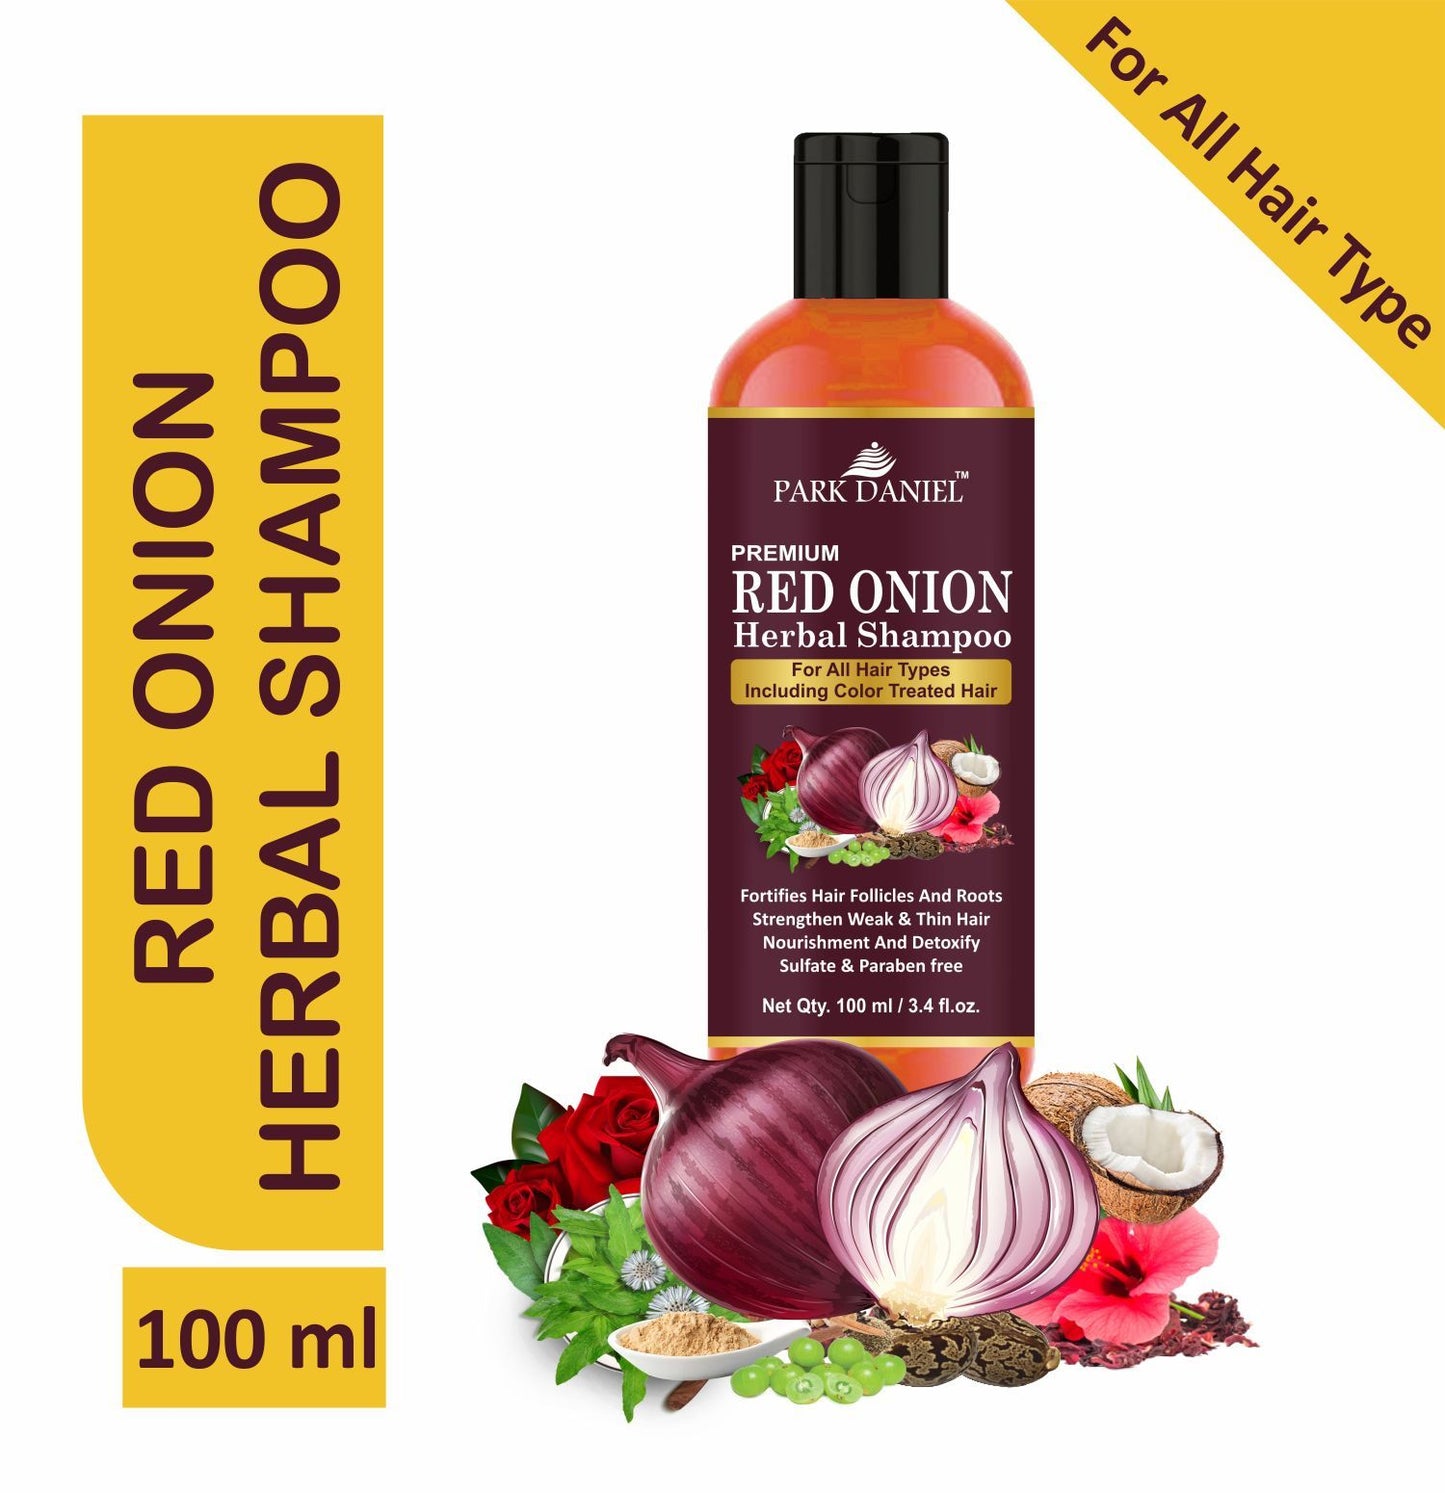 Park Daniel Brown Rice Oil & Red Onion Shampoo Combo Pack Of 2 bottle of 100 ml(200 ml)